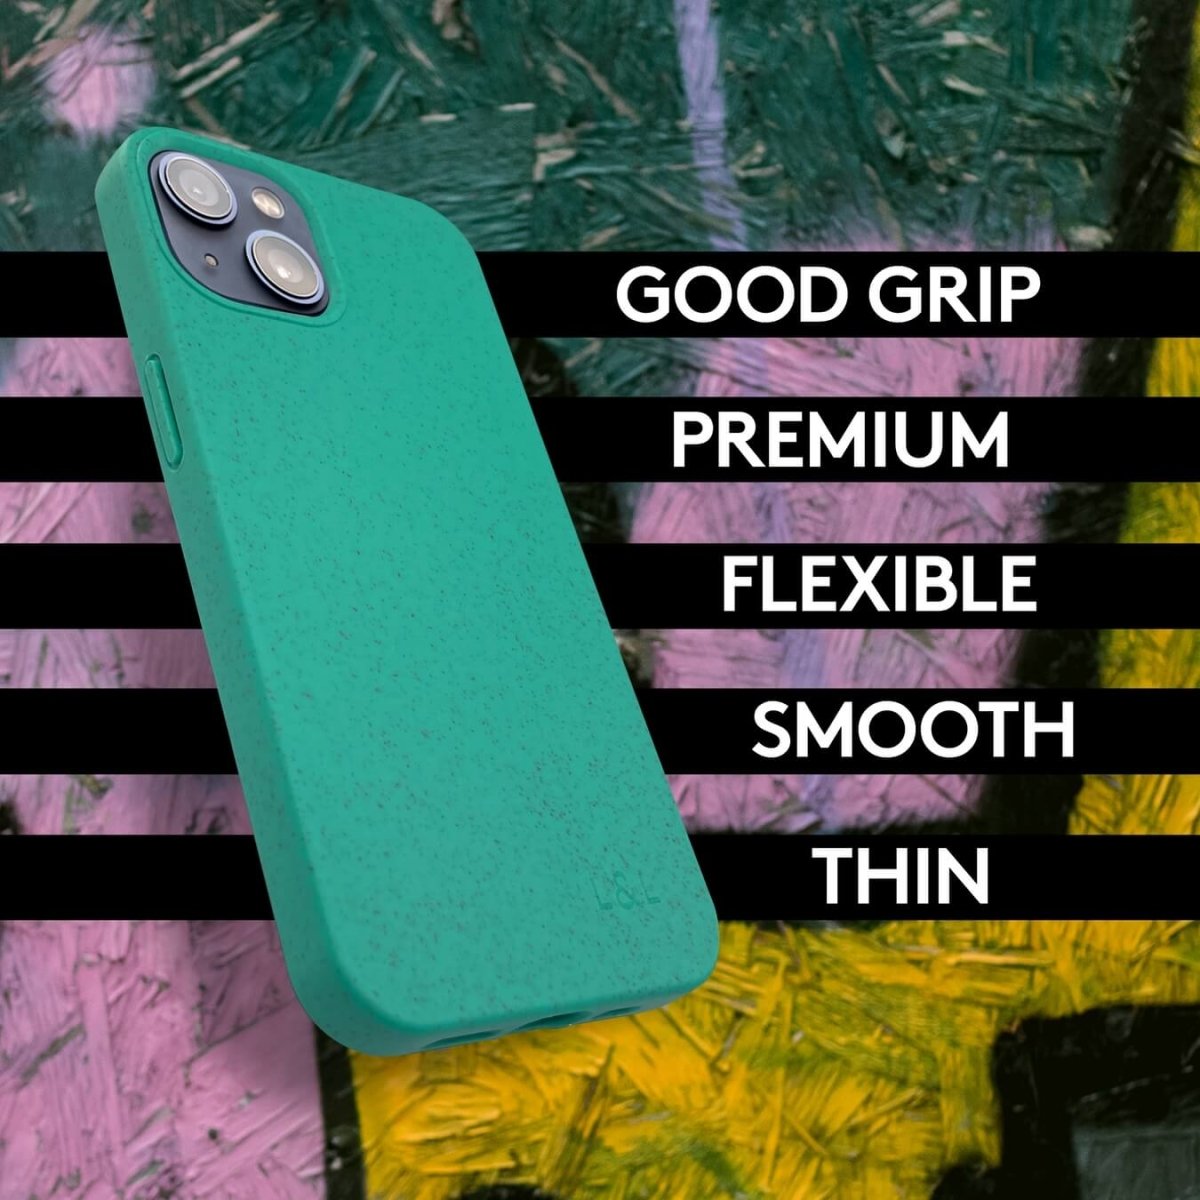 Biodegradable iPhone 14 Pro Max Case - Mint - Loam & Lore